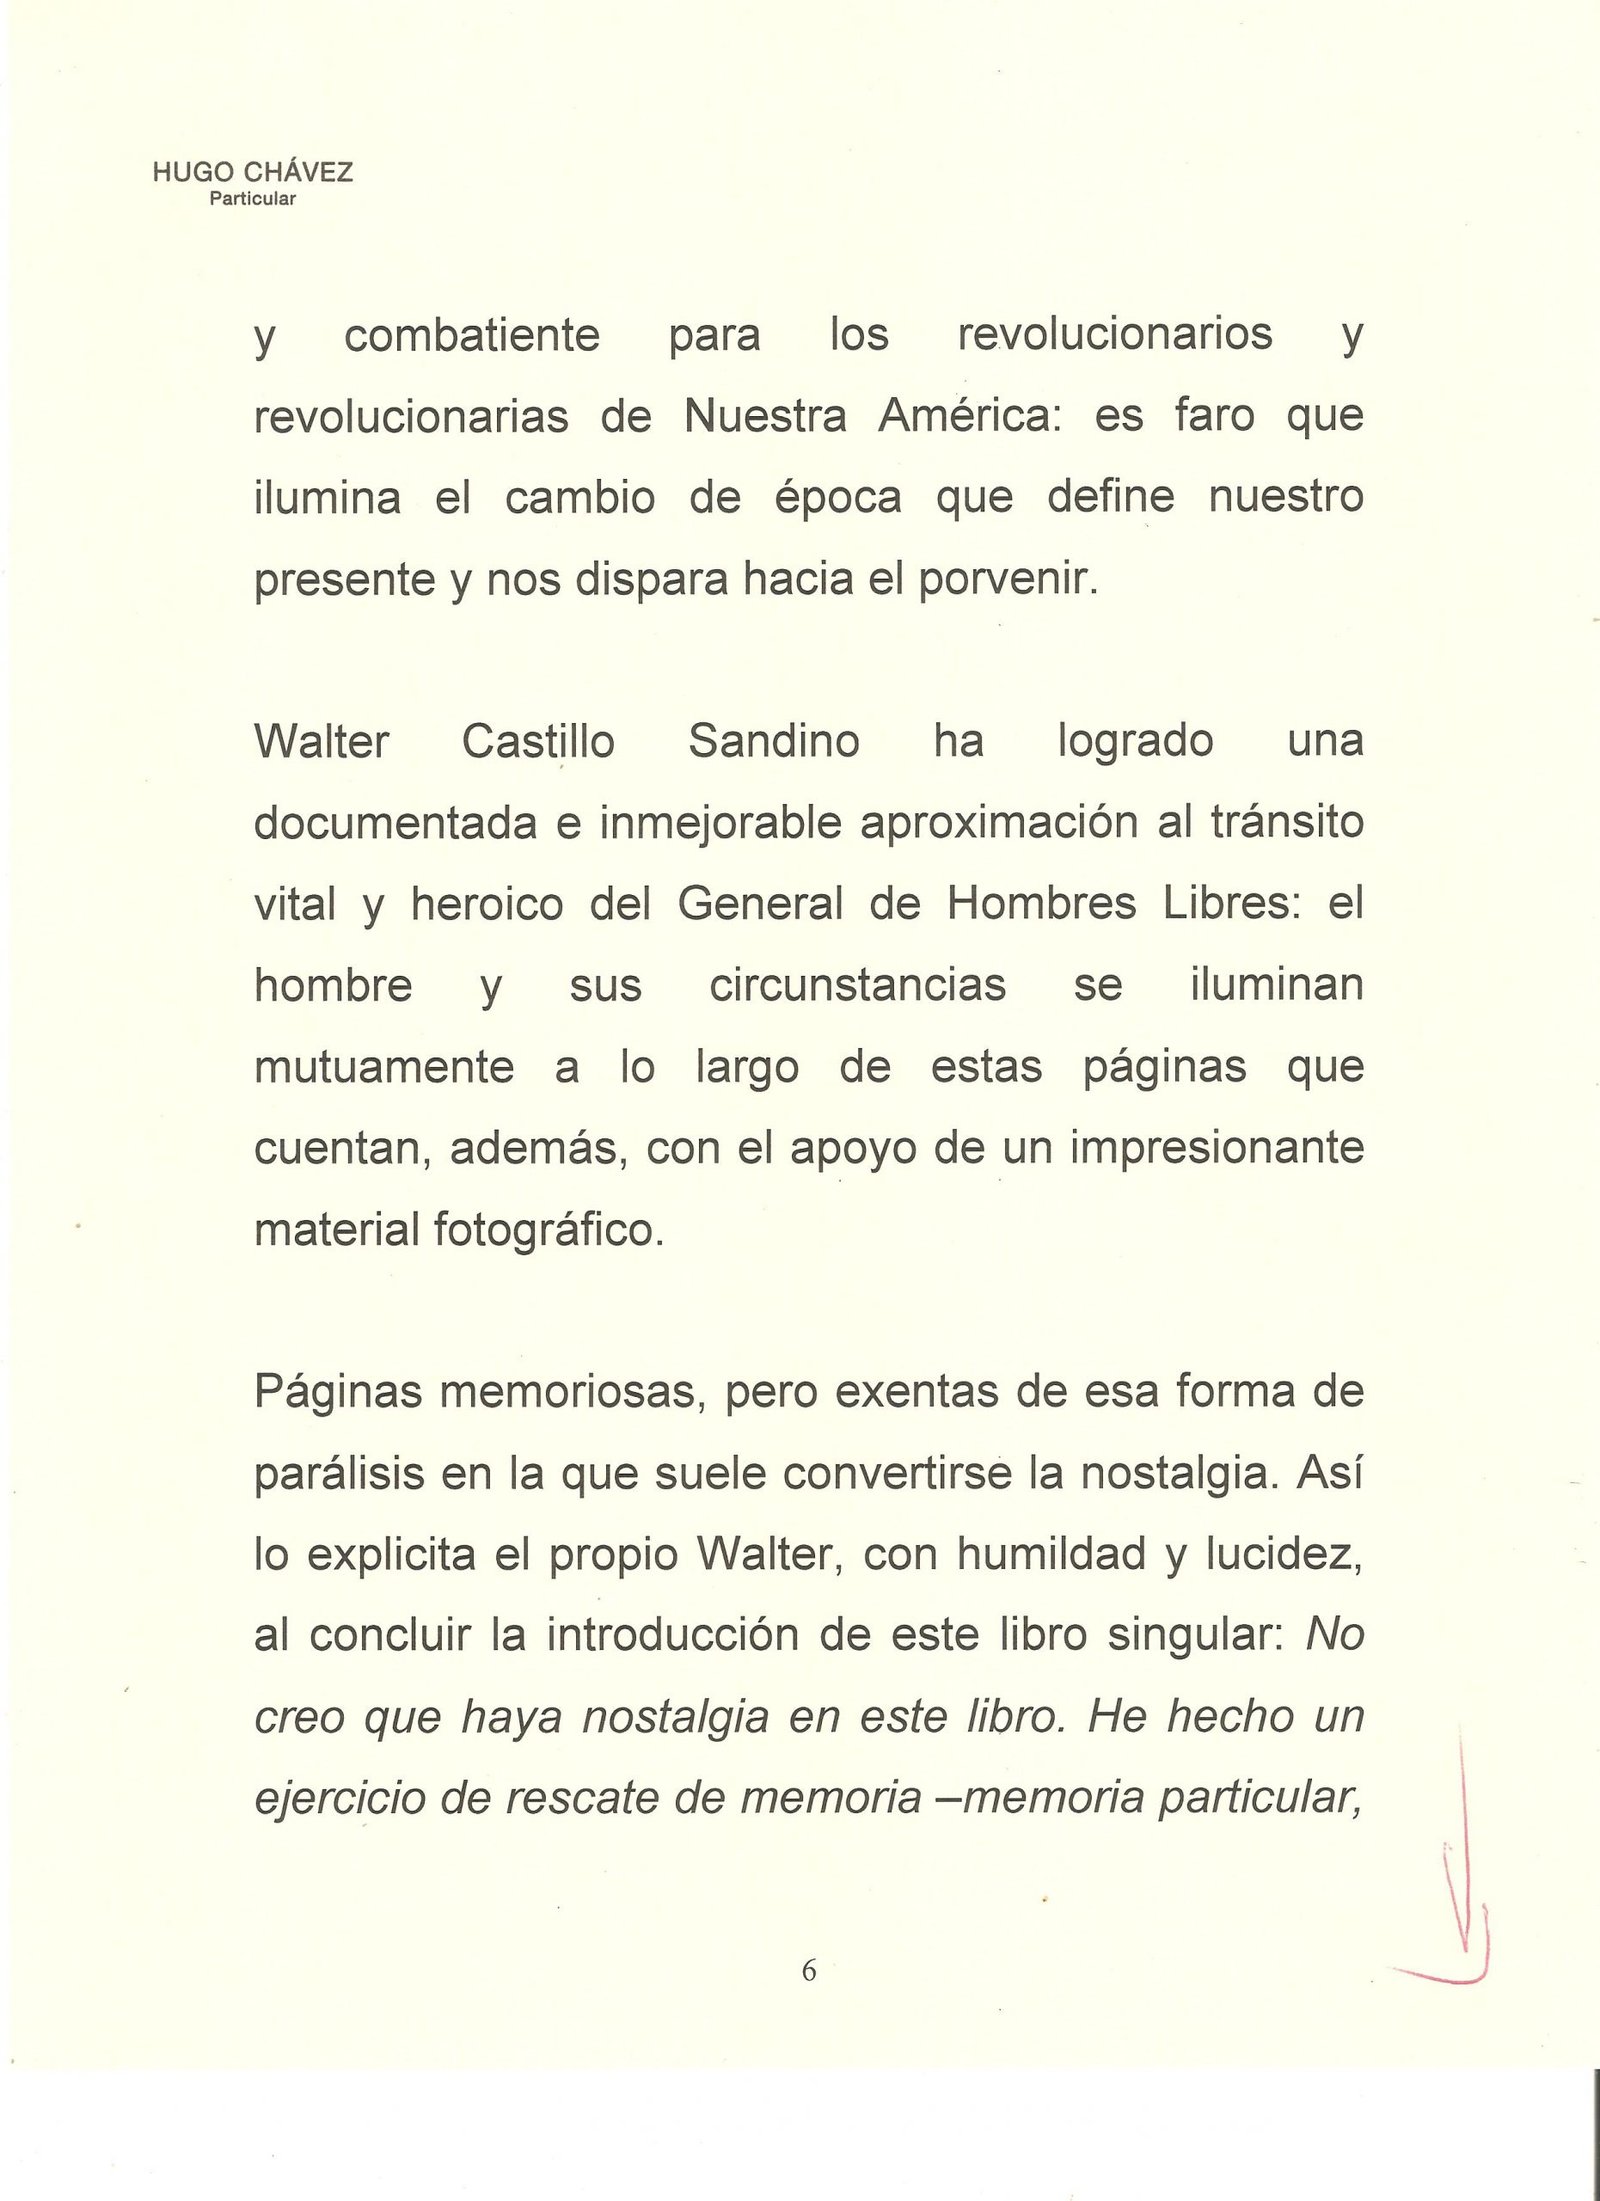 PROLOGO DE HUGO CHAVEZ A WALTER 6